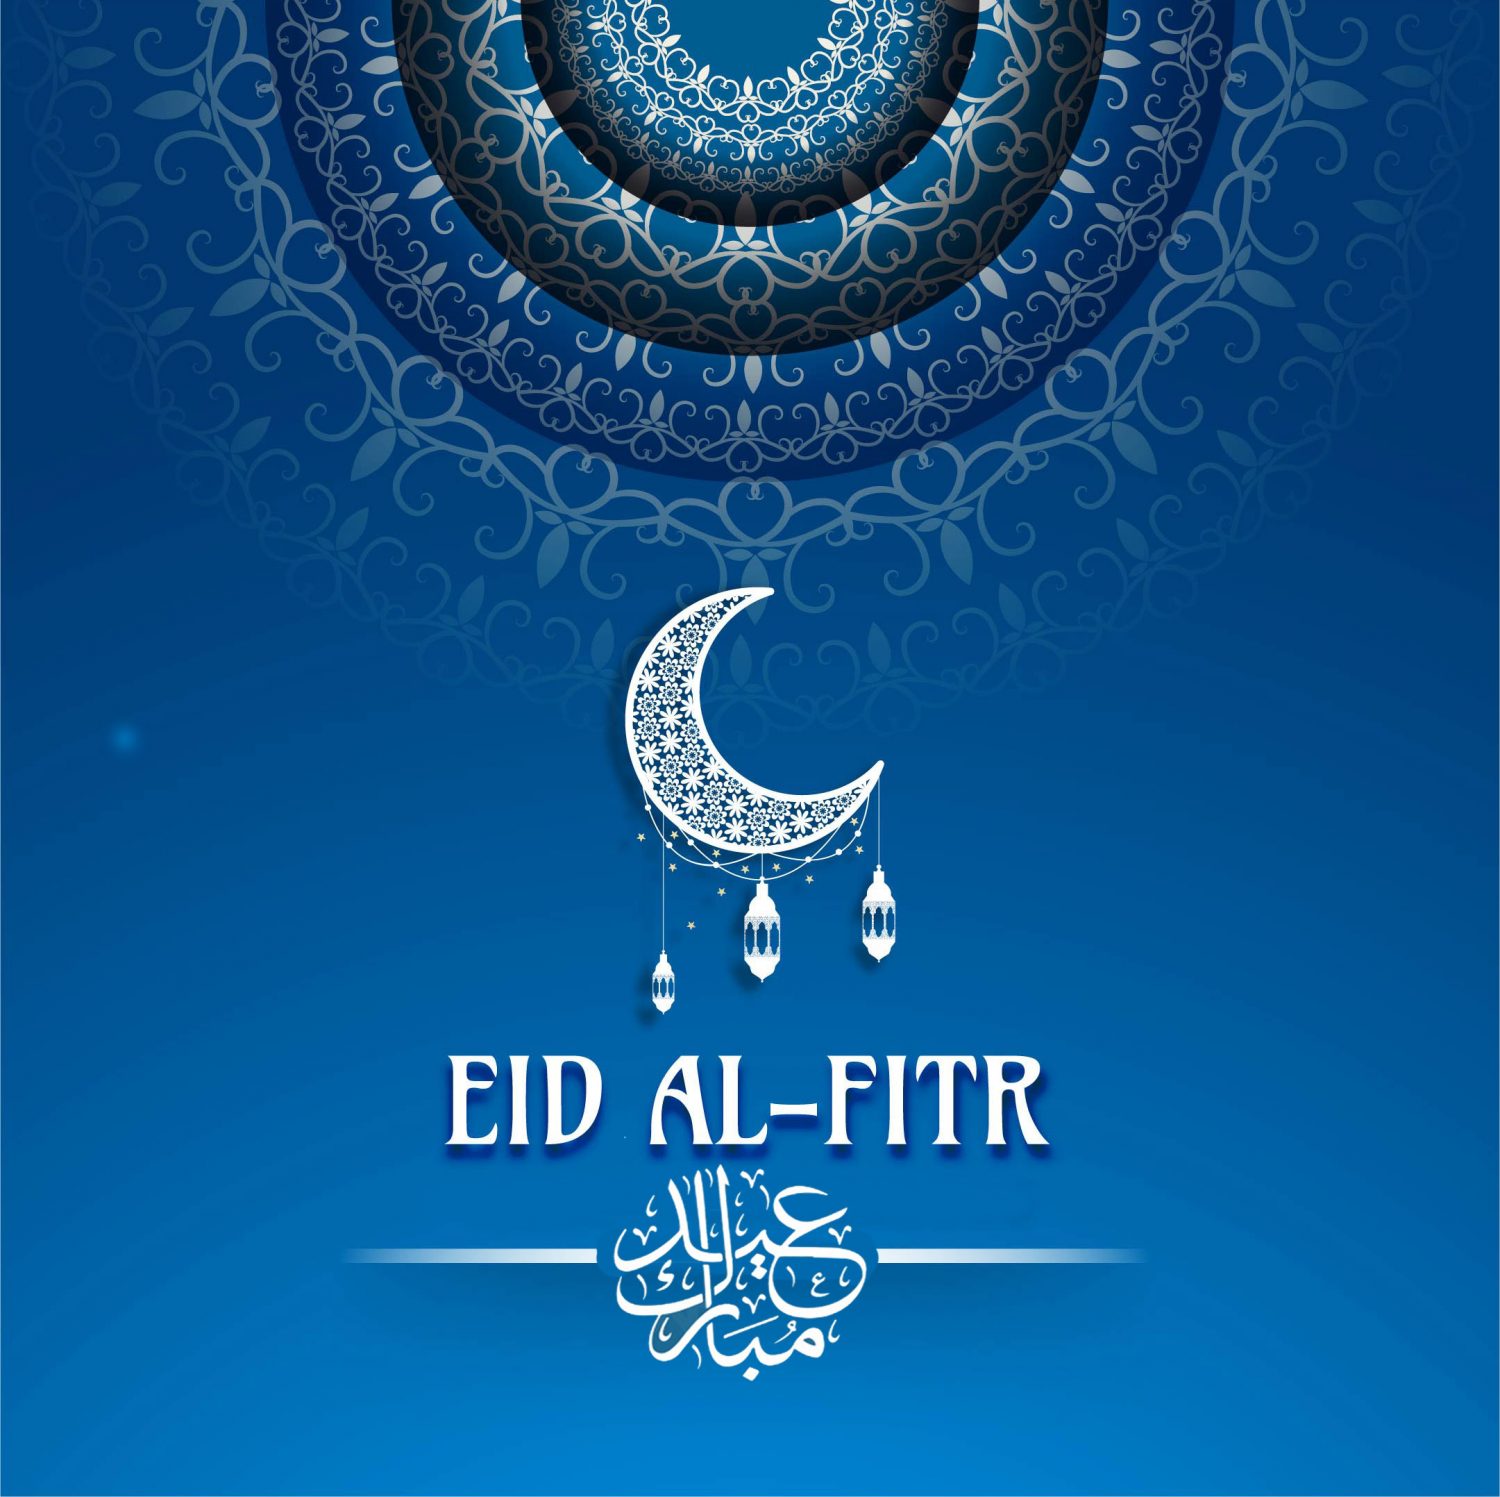 Eid al fitr photo 15